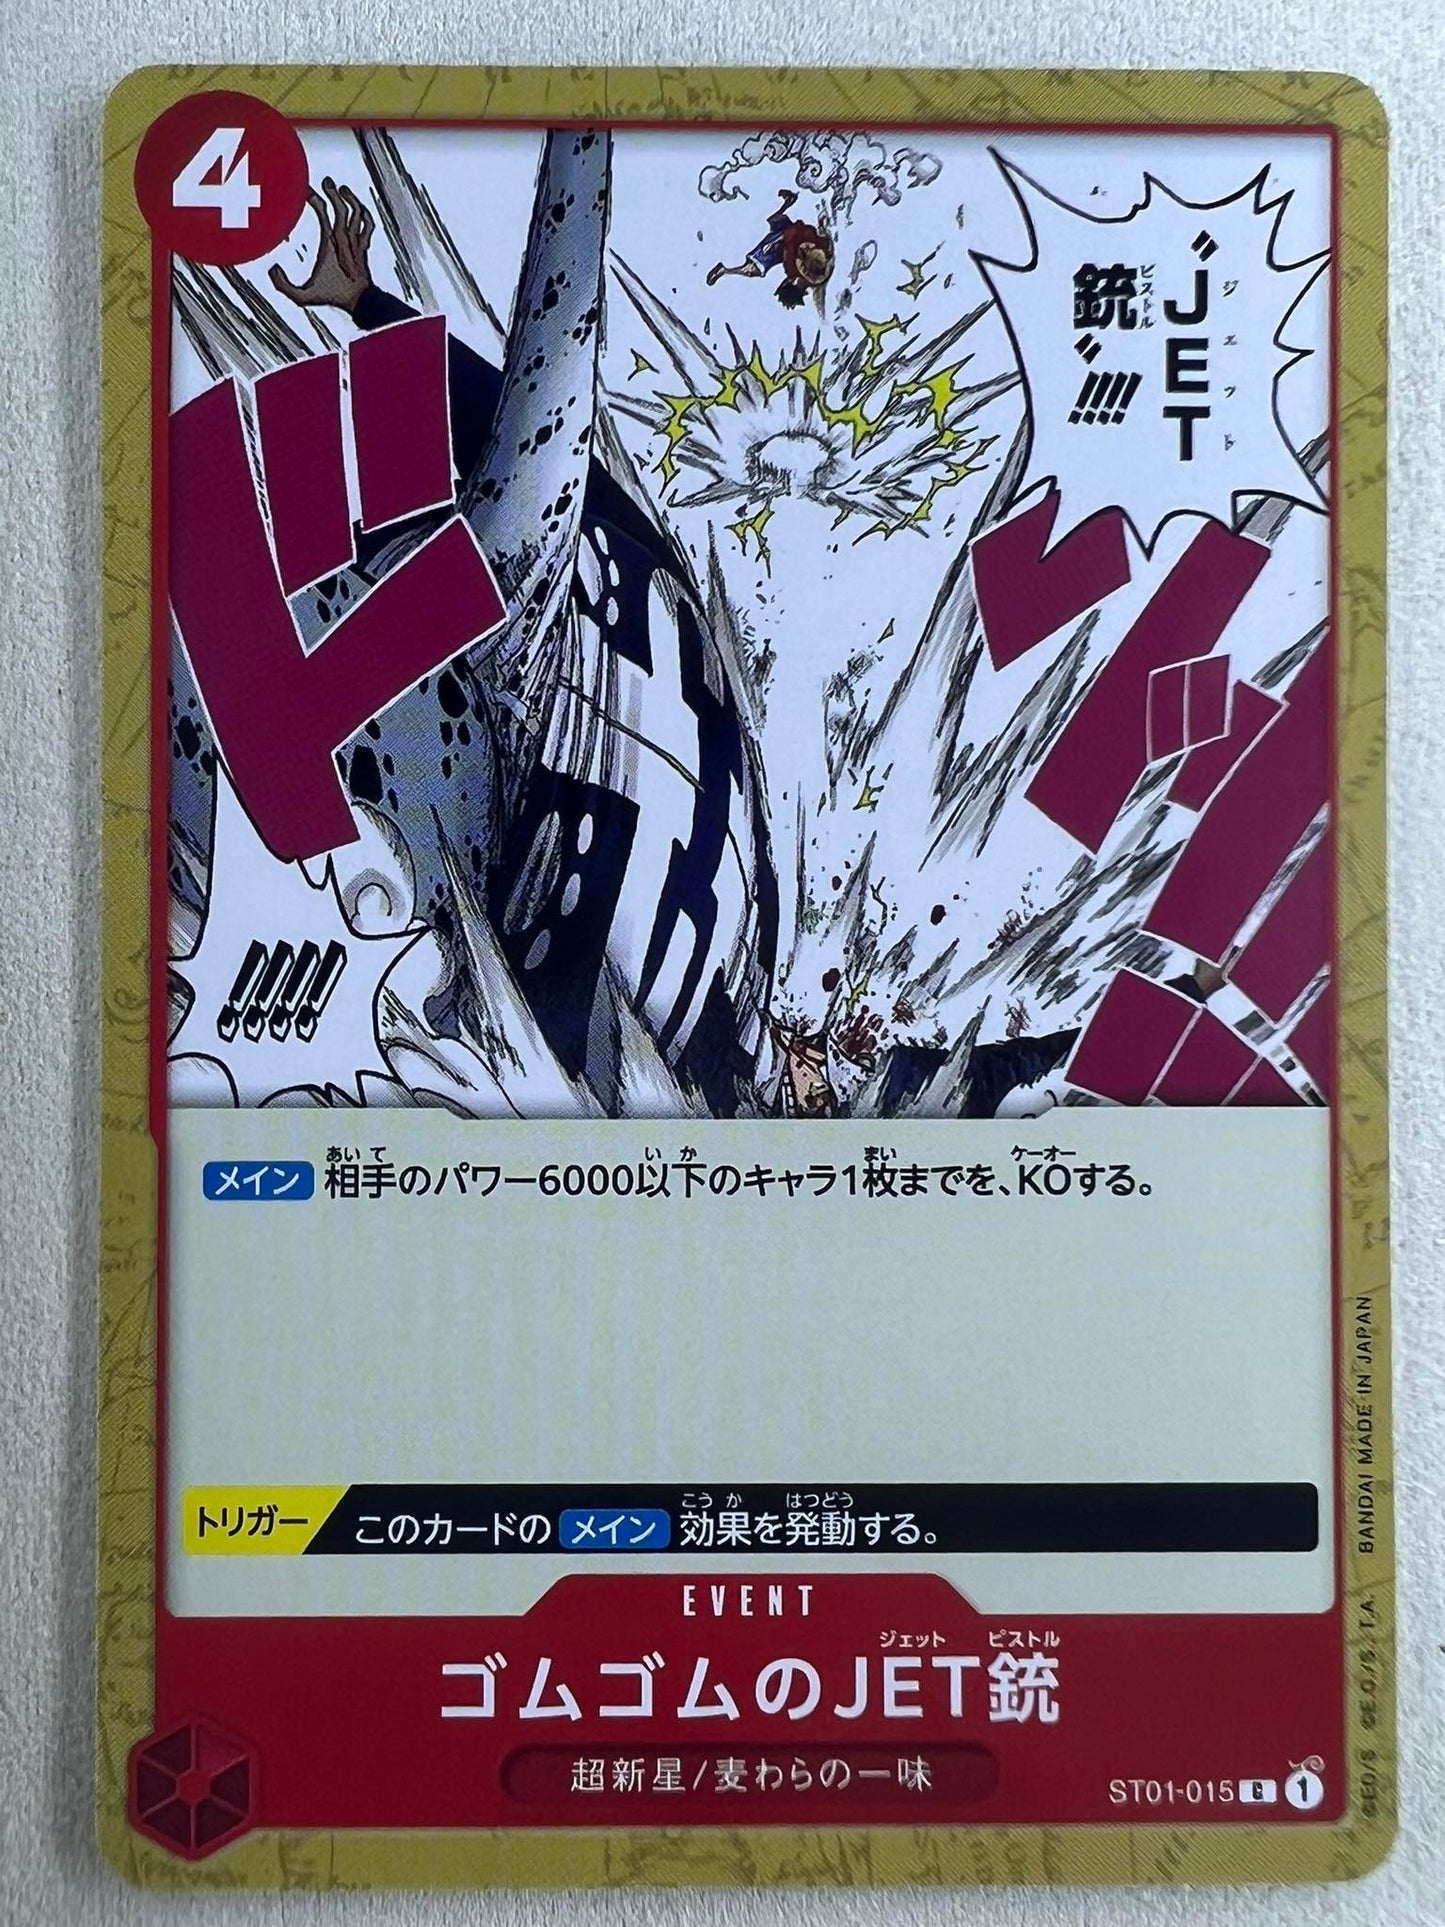 ST01-015 Gum Gum Jet Pistol C – One Piece Trading Card Game